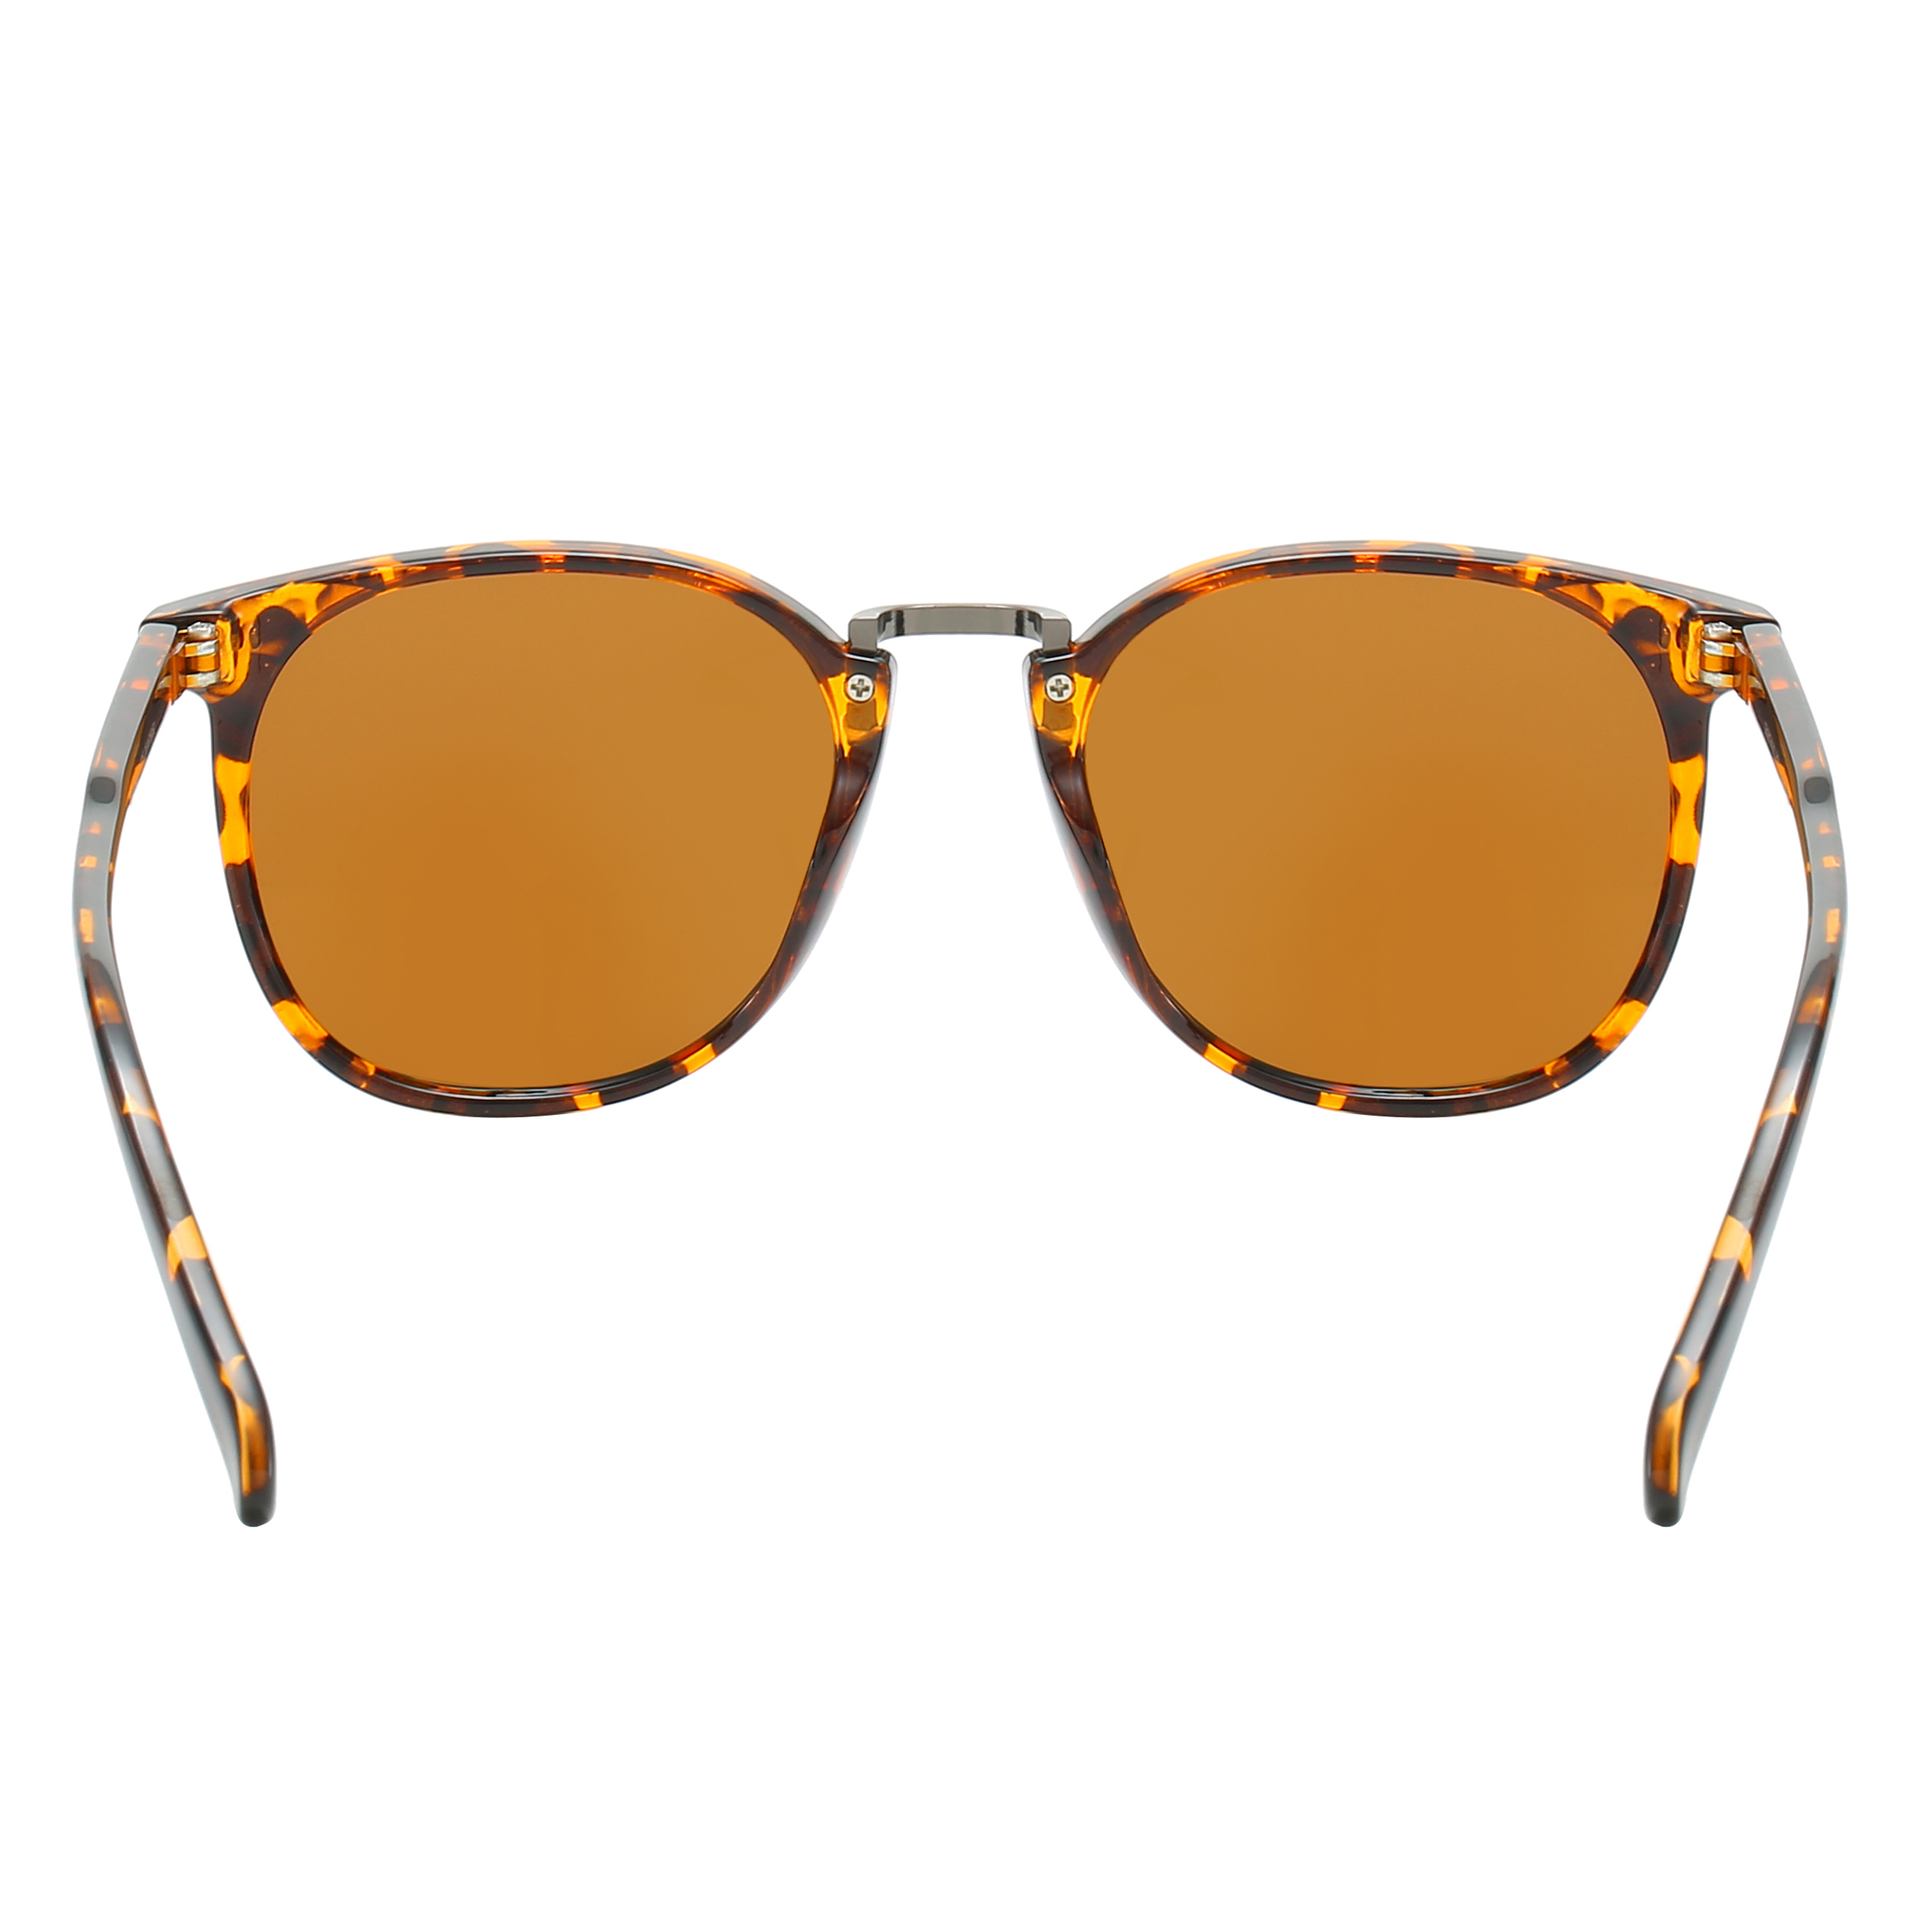 Piranha Eyewear Durado Round Demi Women's Sunglasses with Brown Polarized Lens - image 4 of 4